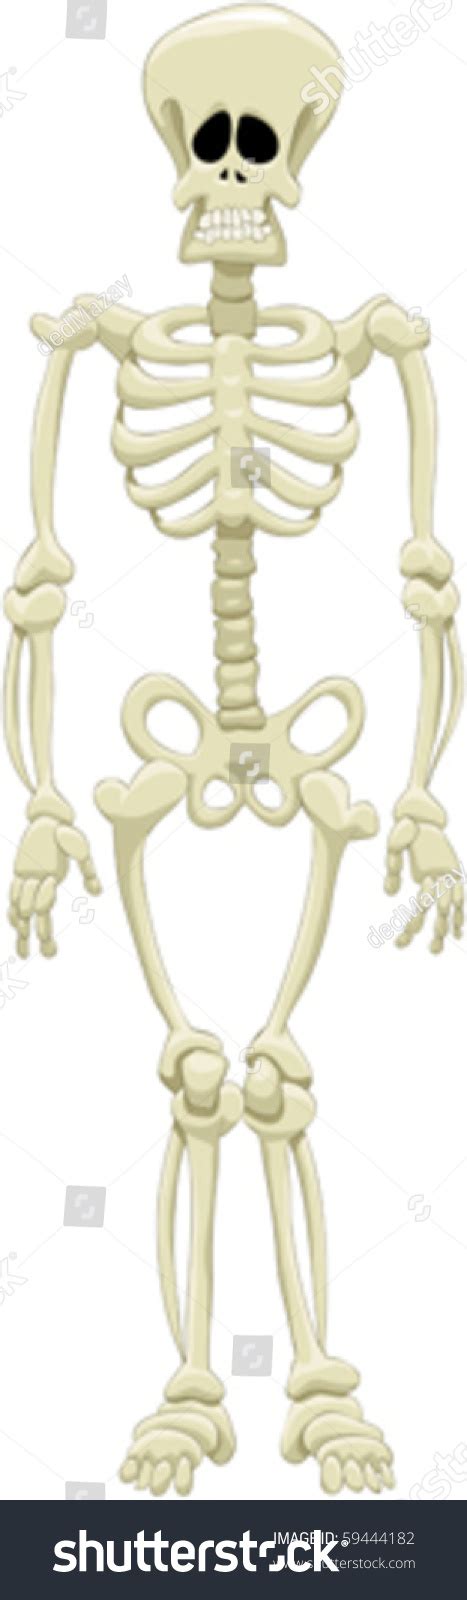 Cartoon Illustration Funny Human Skeleton Stock Vector